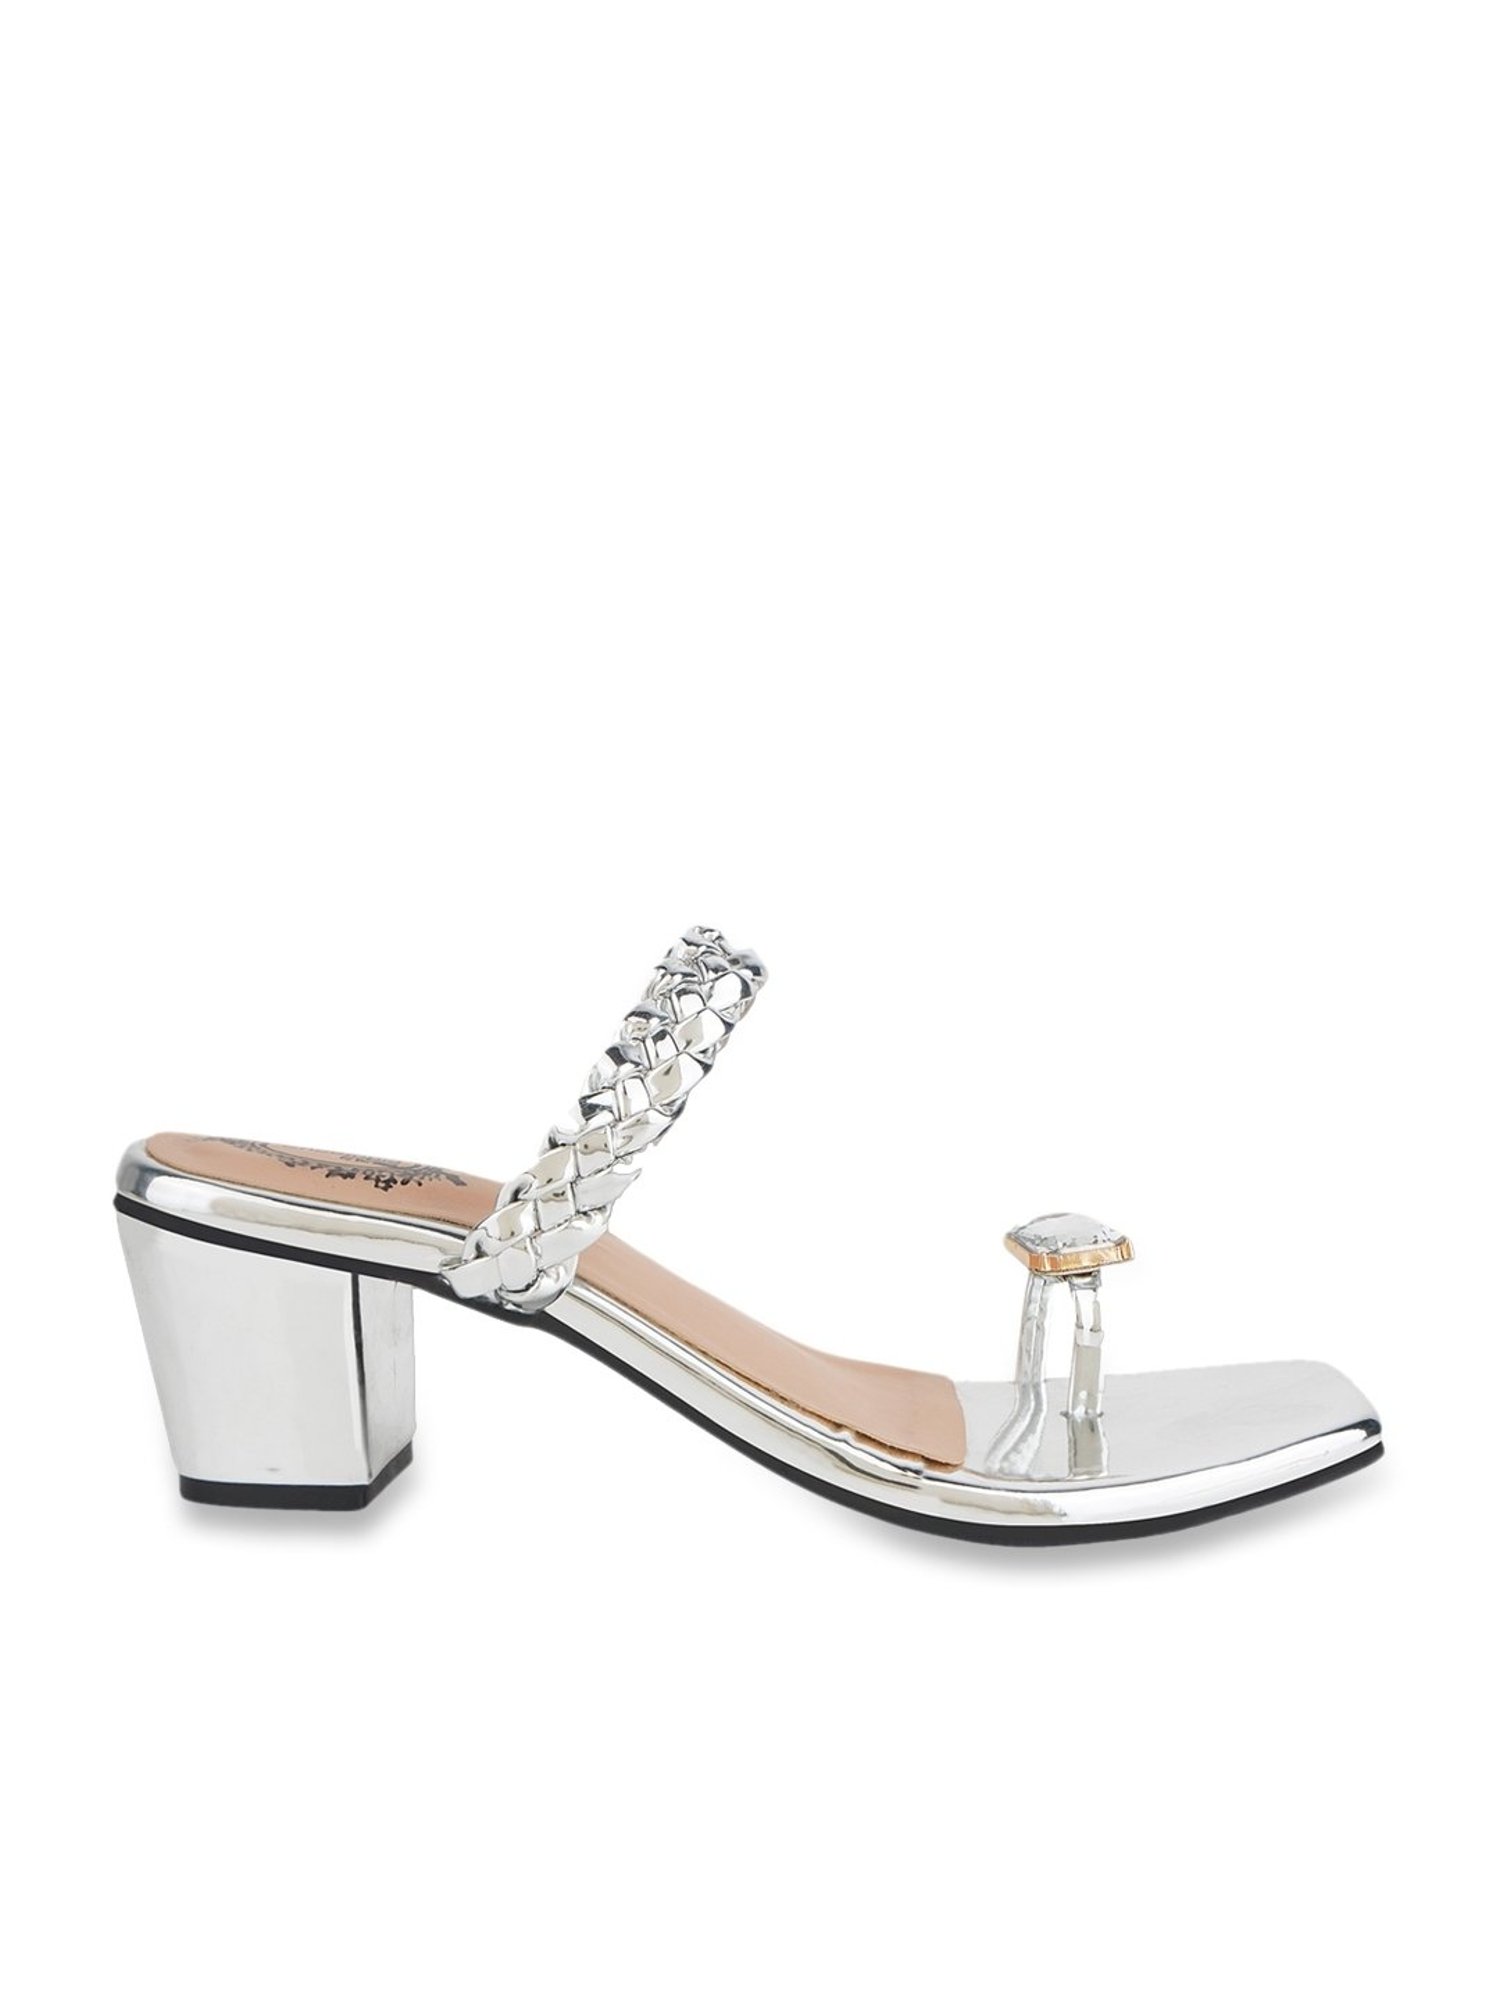 Steve Madden Womens Heeled Tia SIlver Rhinestone Pump Sandals Shoes US 9 EU  39.5 | eBay